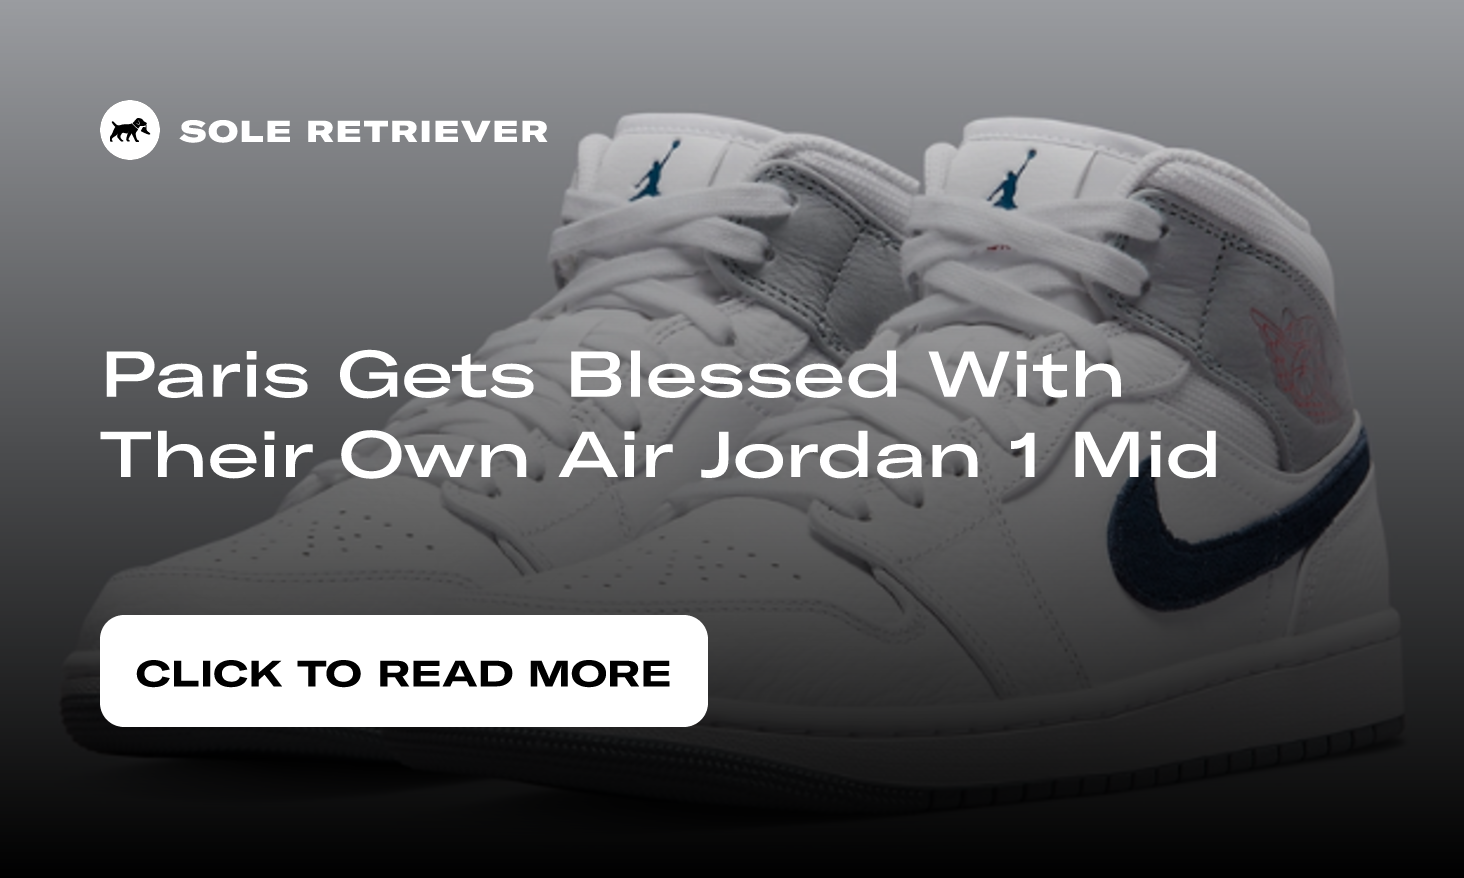 This Limited, Custom Air Jordan 1 is Exclusive to Paris